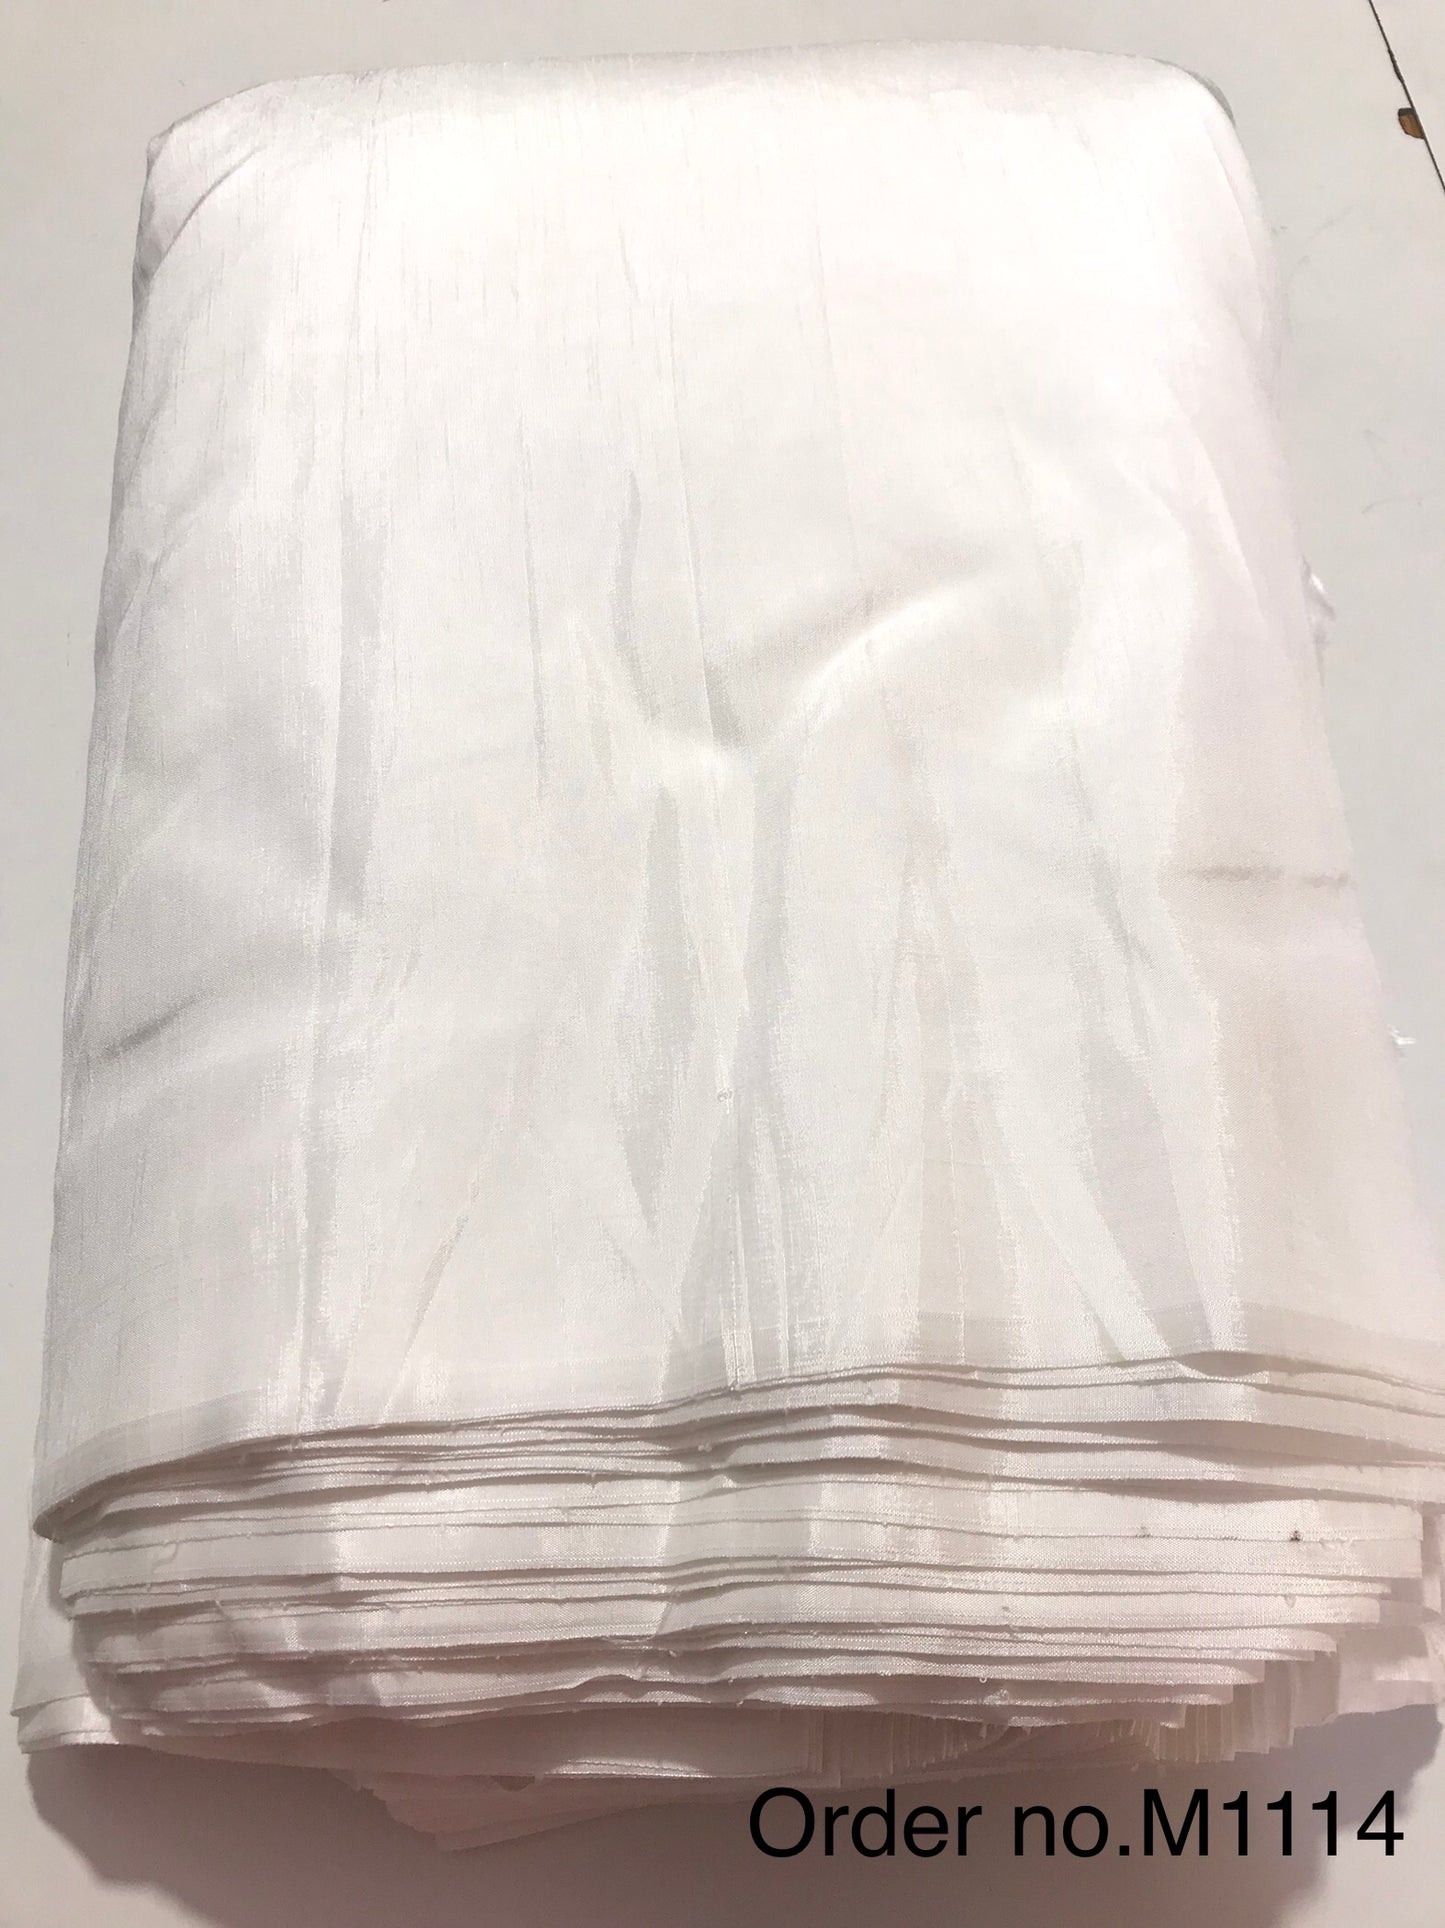 Viscose raw silk 100gm width 44”